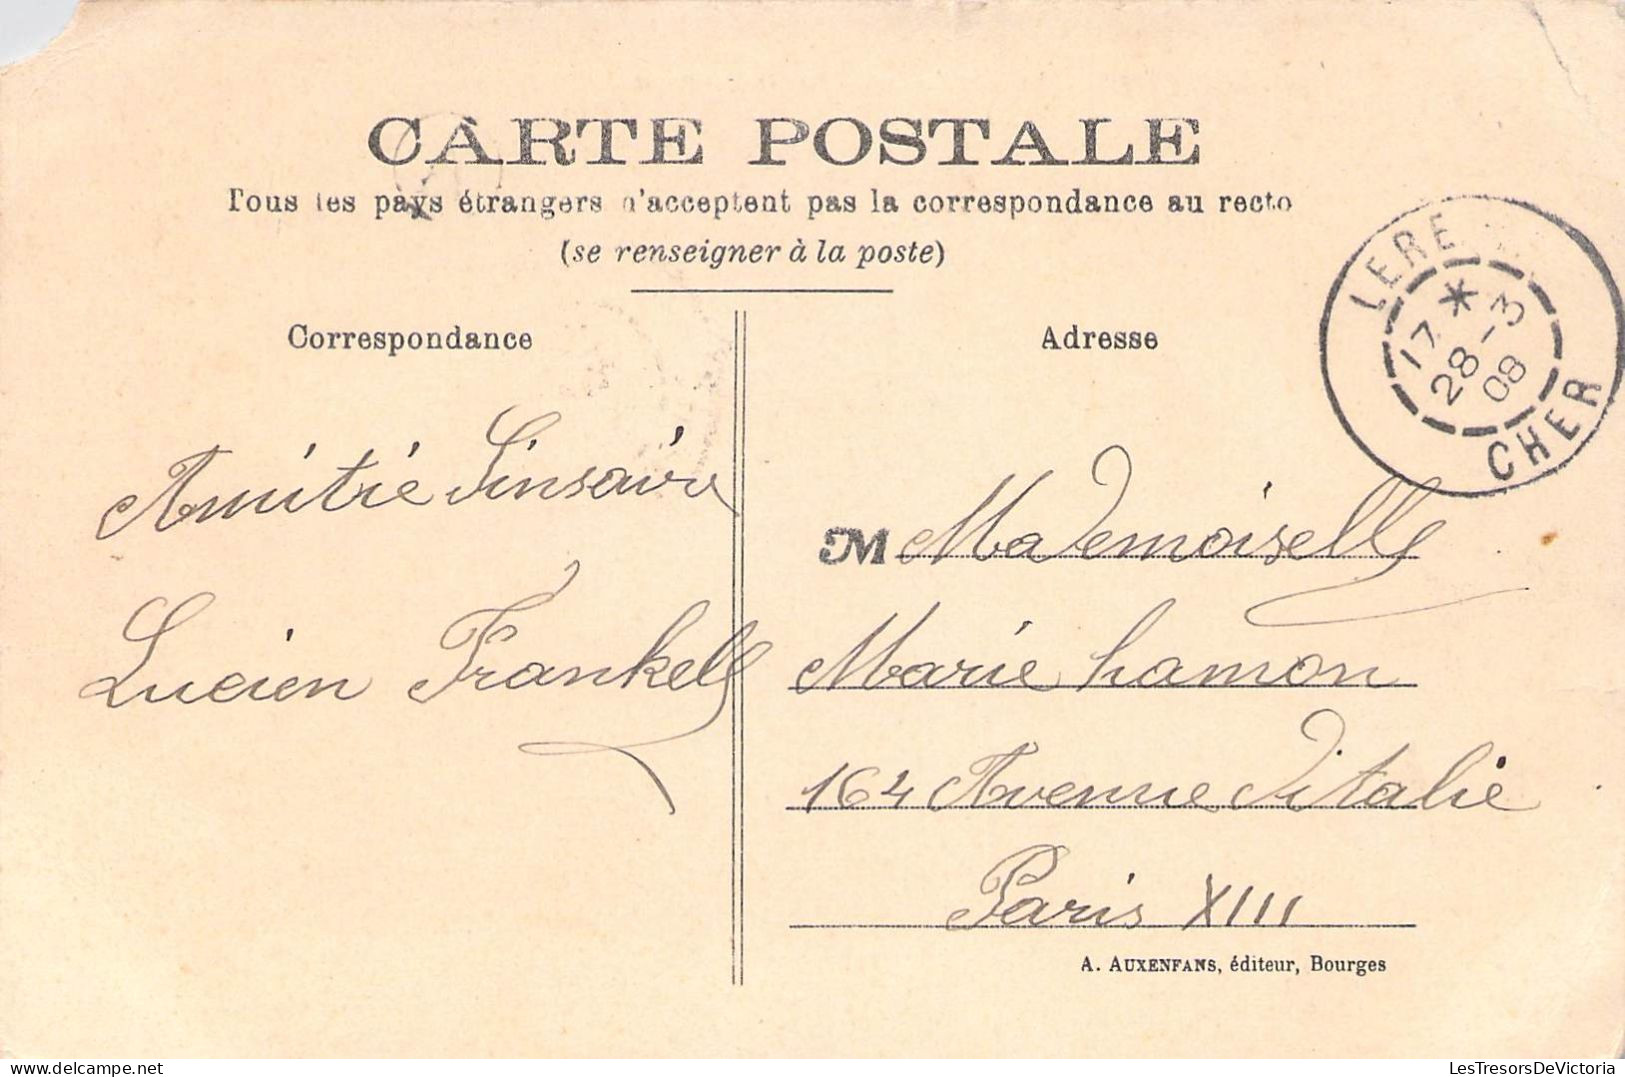 FRANCE - 18 - LERE - La Grande Rue - La Gendarmerie - Coin De Carte Arraché - Carte Postale Ancienne - Lere